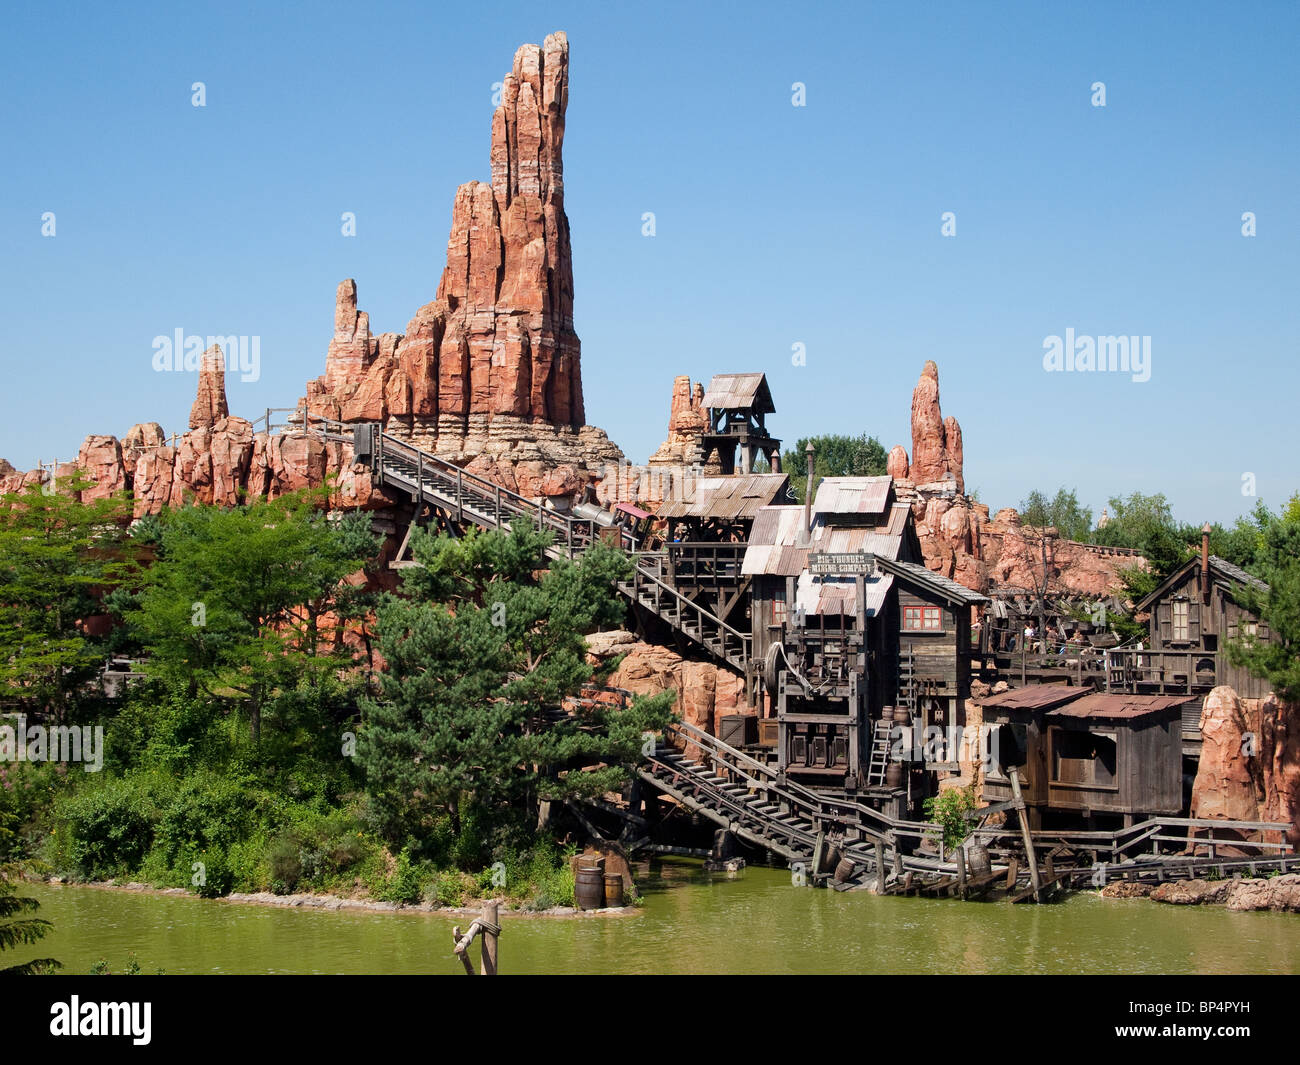 Big Thunder Mountain Roller Coaster, Disneyland Paris Stock Photo